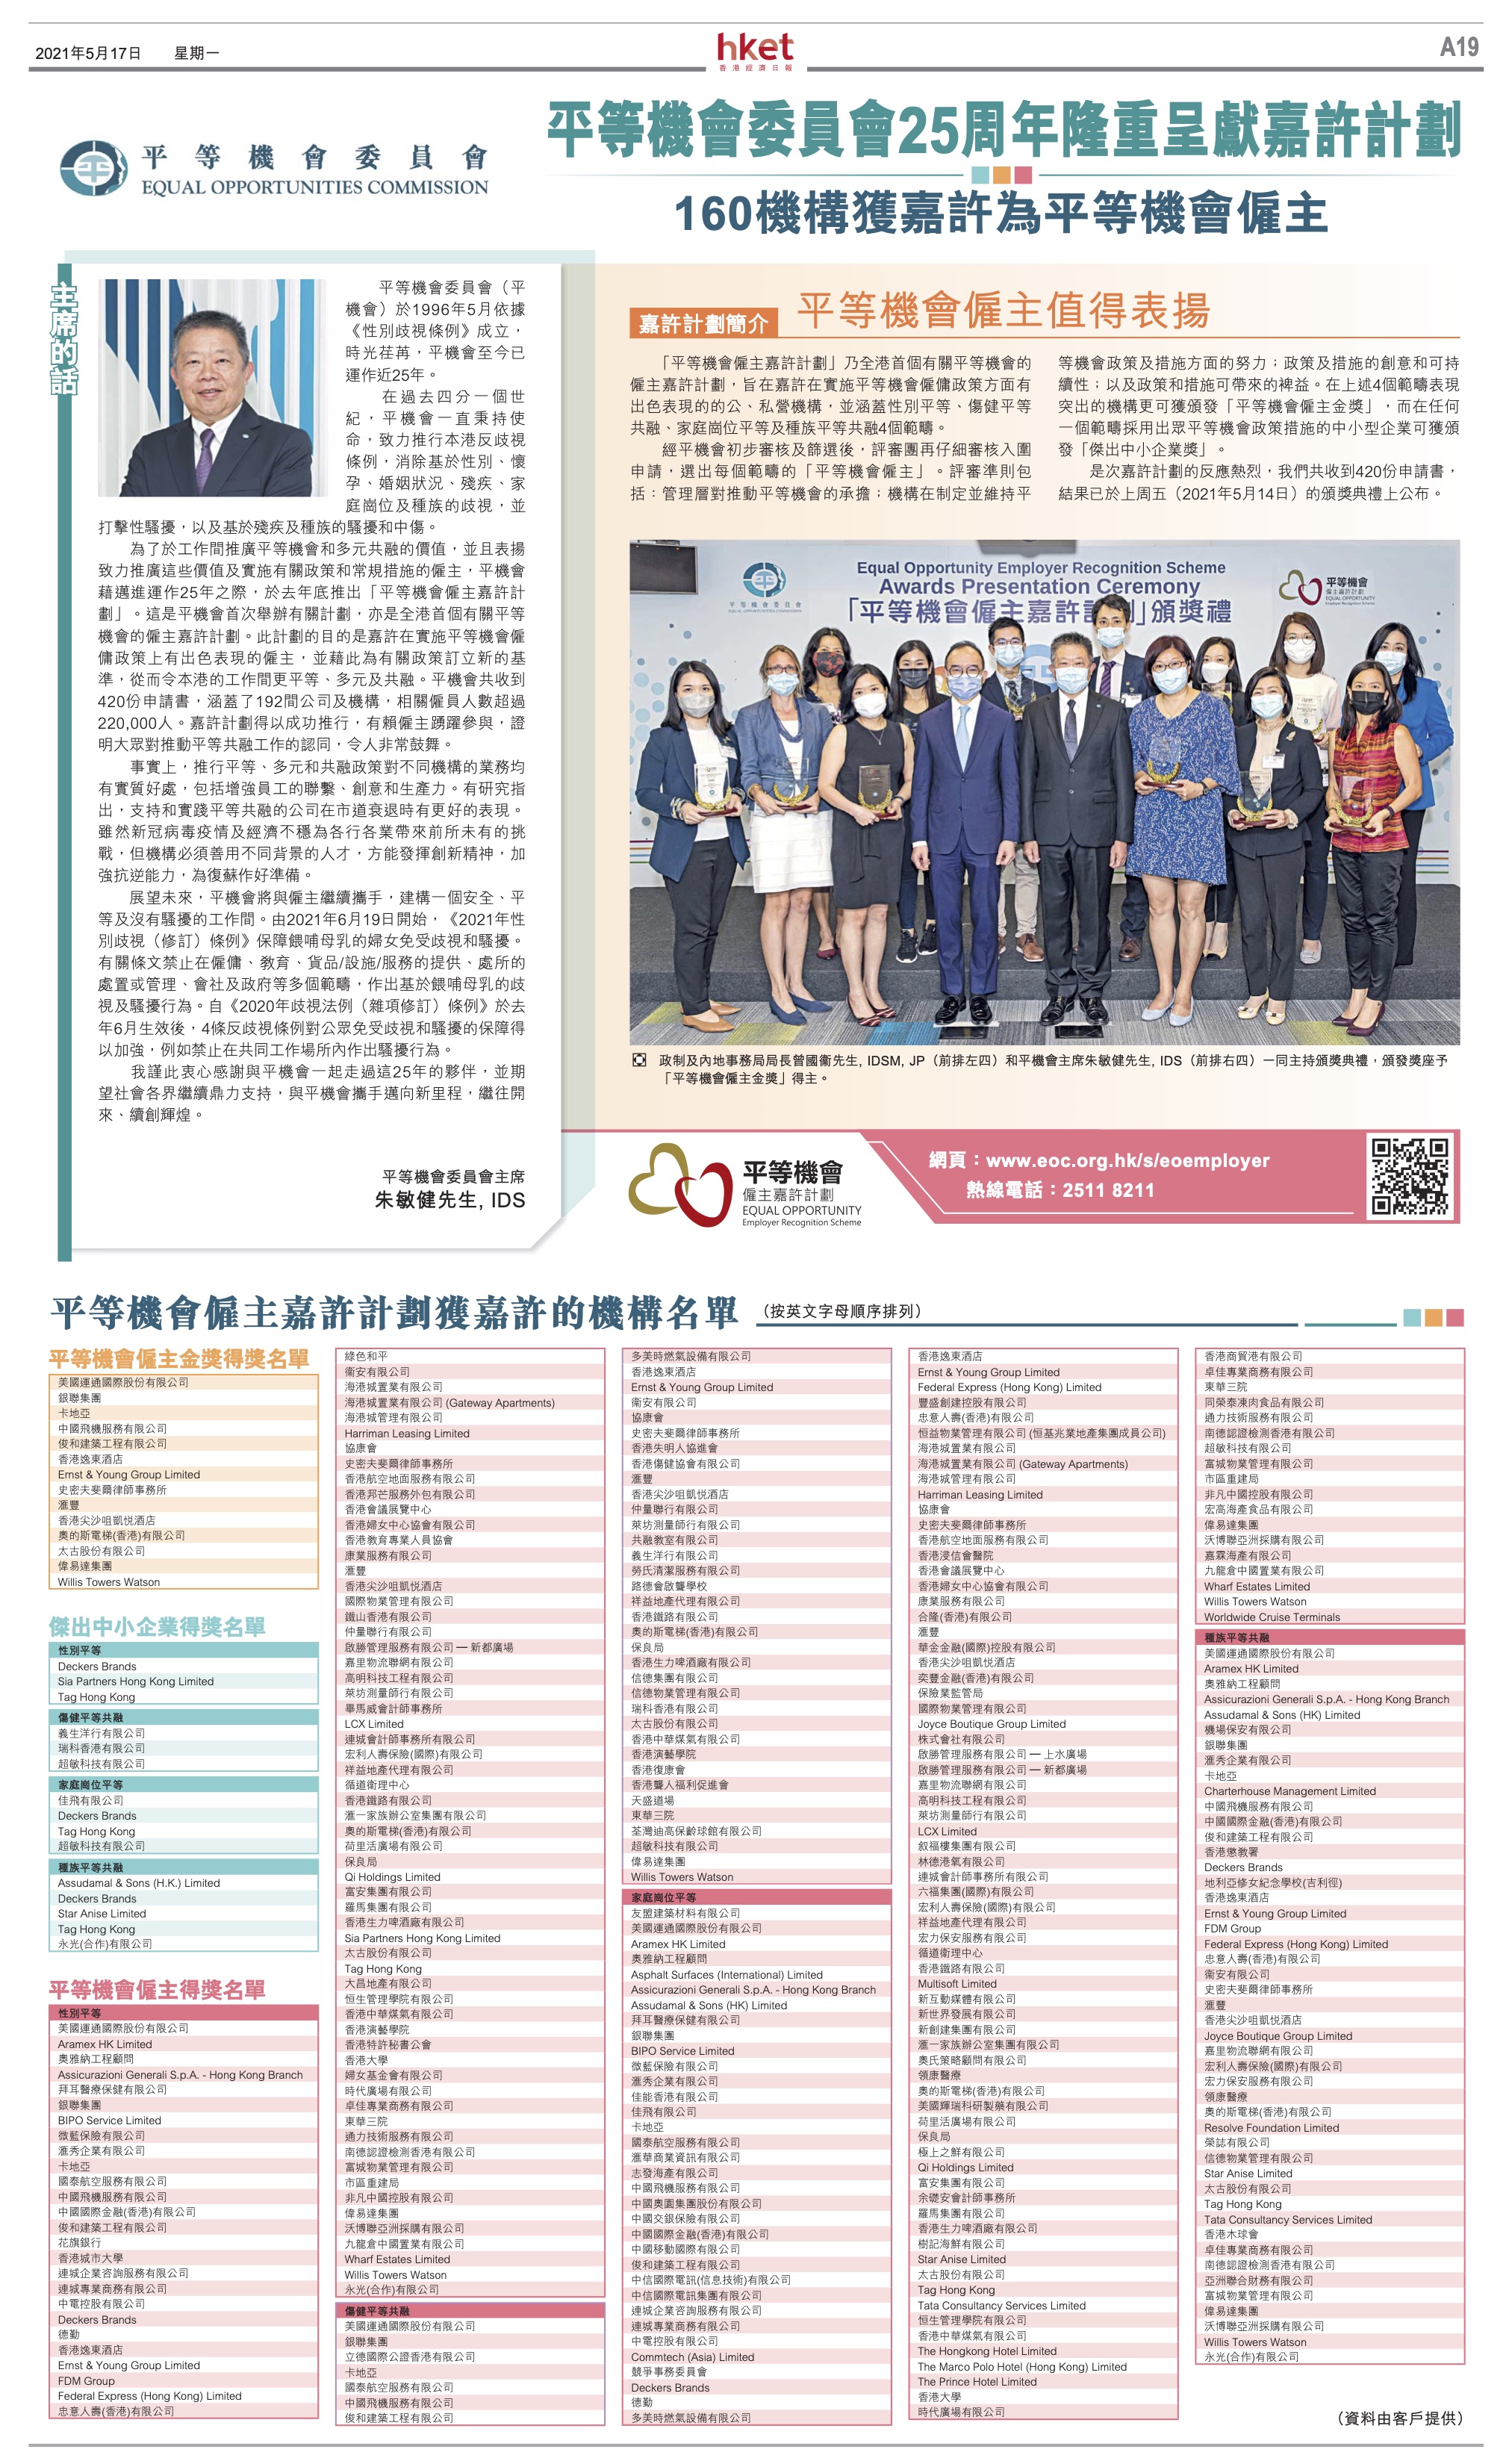 香港經濟日報 Hong Kong Economic Times